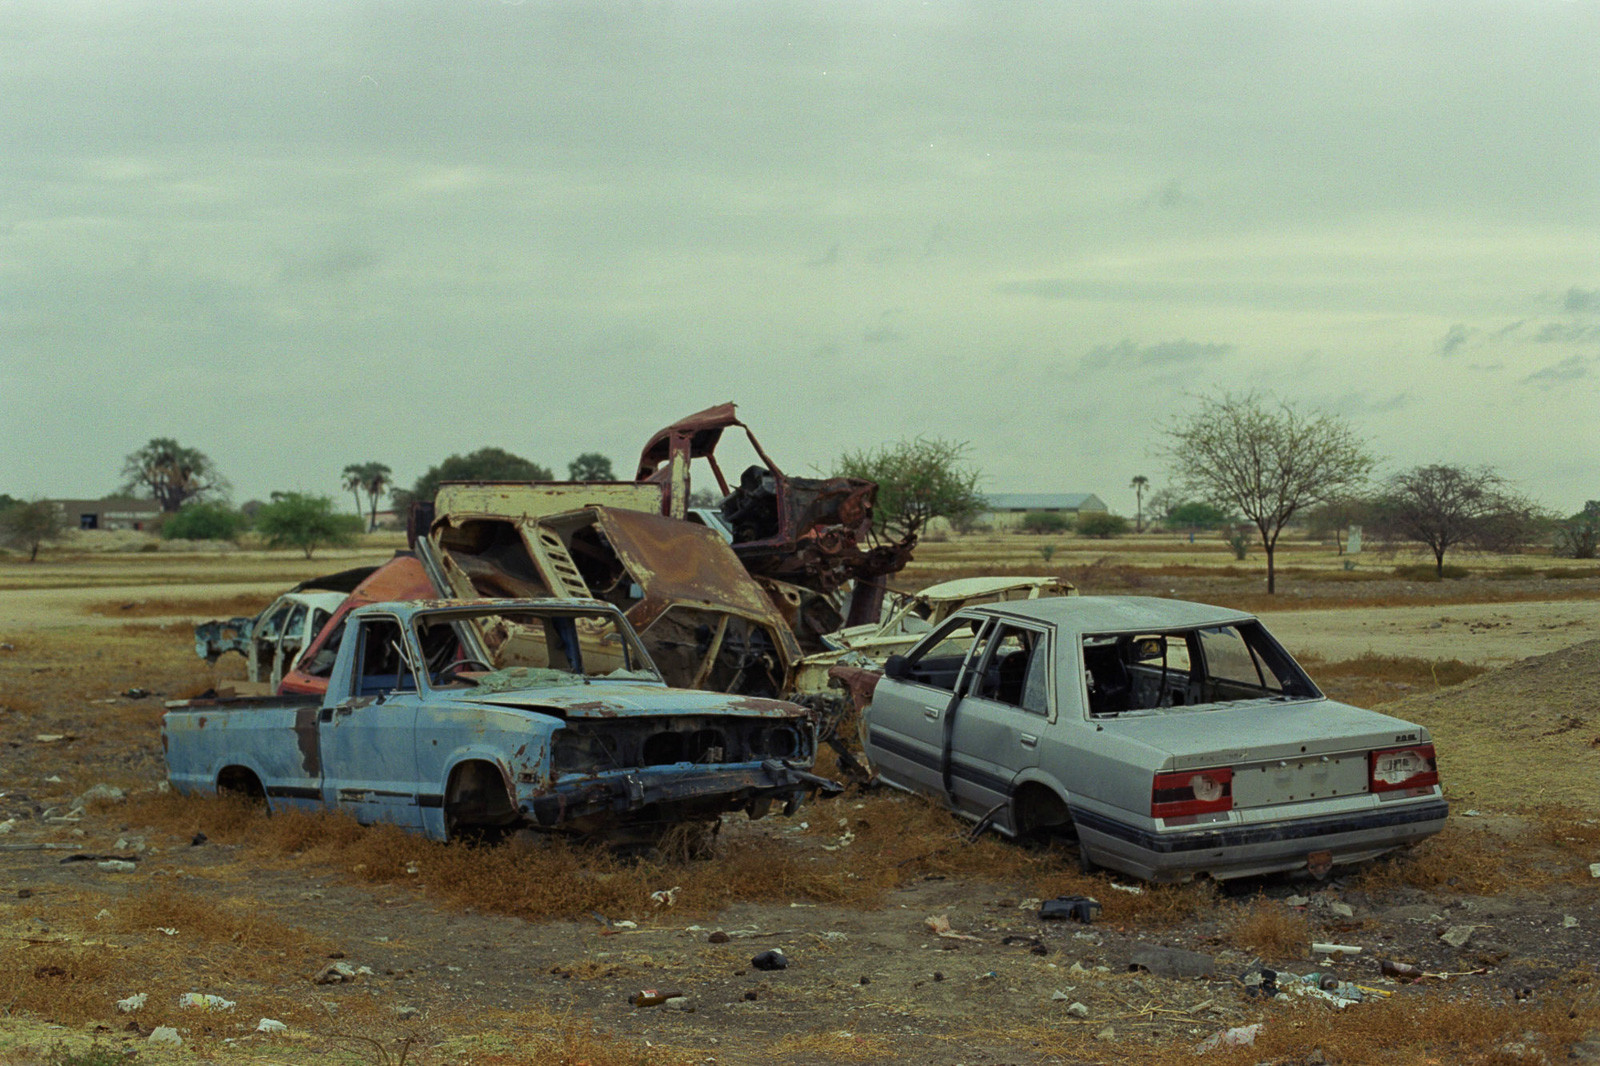 namibia-desolation-05.jpg